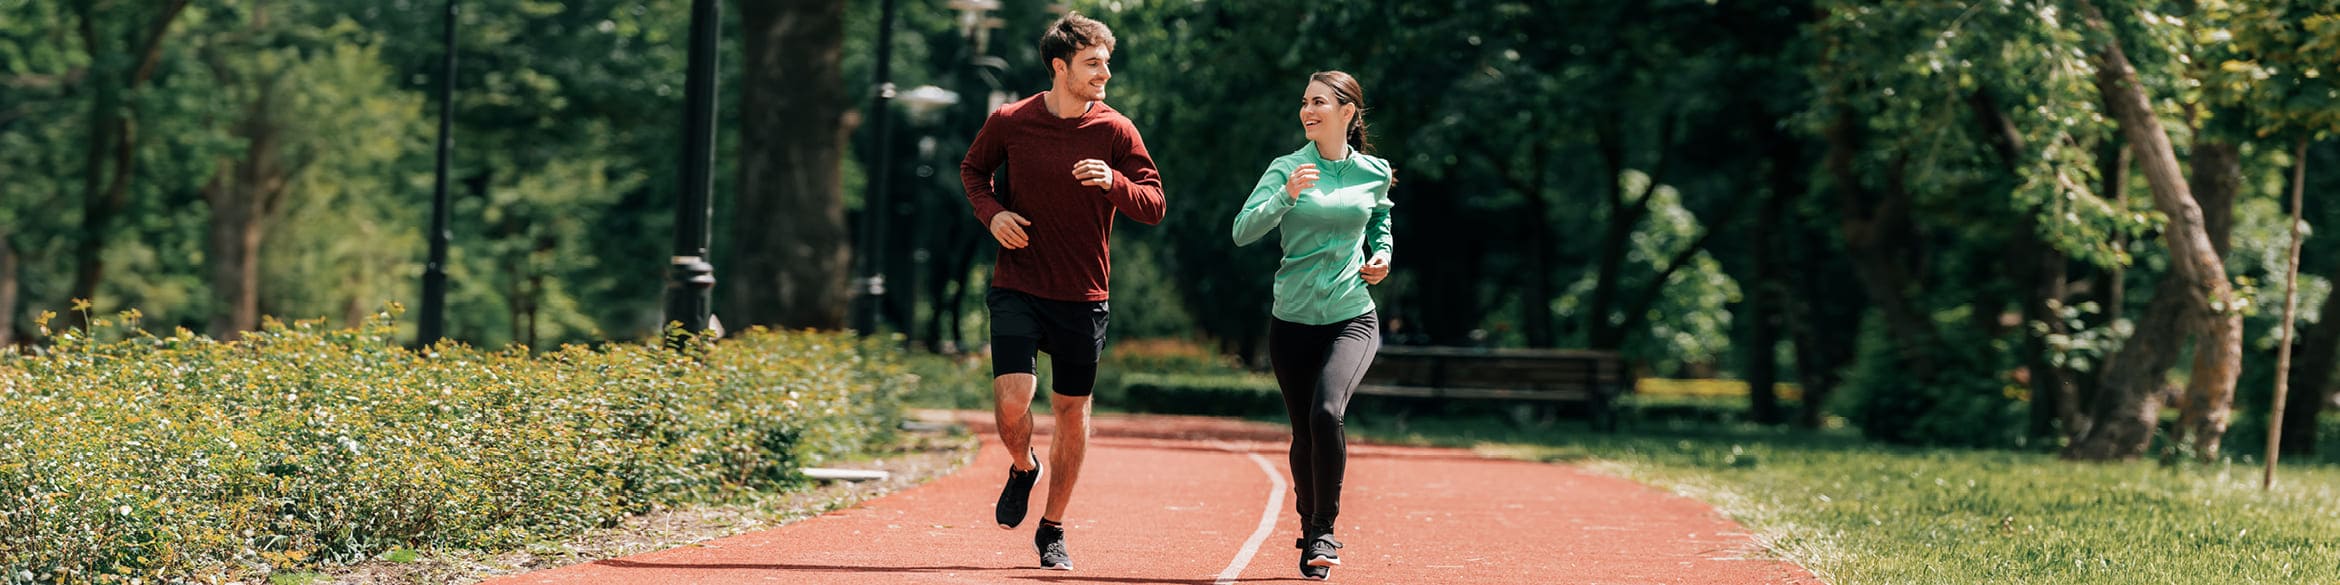 Top 5 Benefits of Running | Torre Outlet Blog